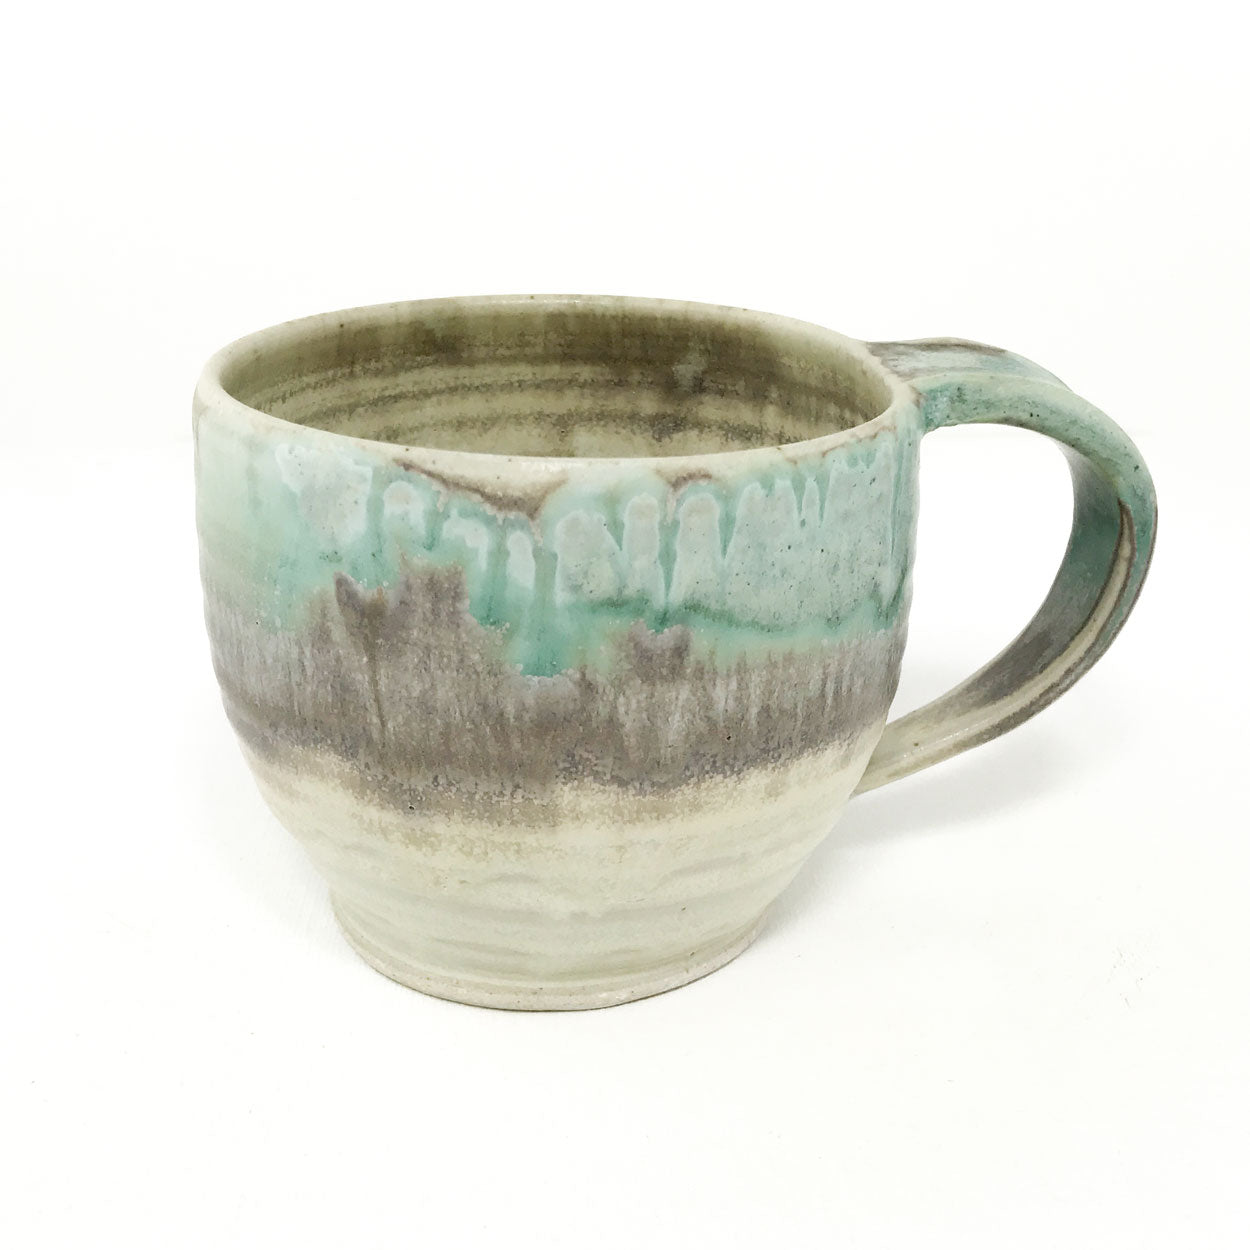 Pottery Latte Mug - Turquoise and Toast